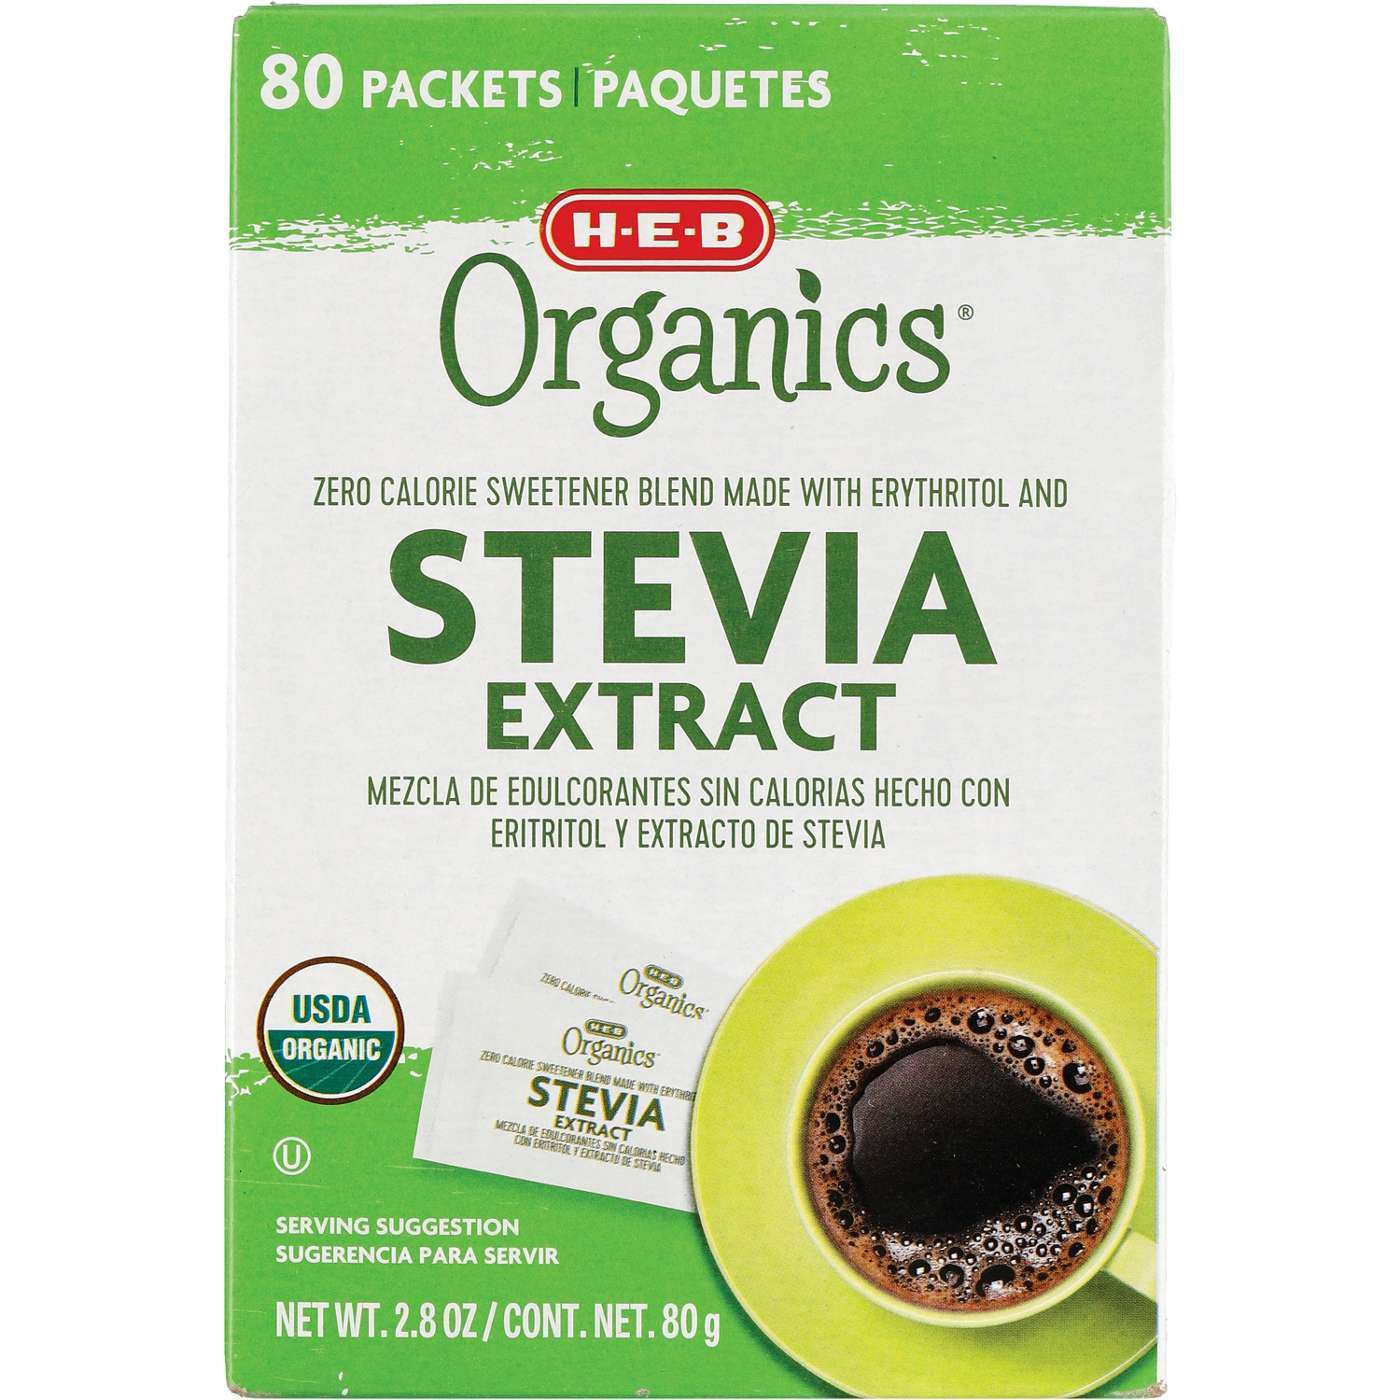 H-E-B Organics Zero Calorie Stevia Blend Sweetener Packets; image 1 of 2